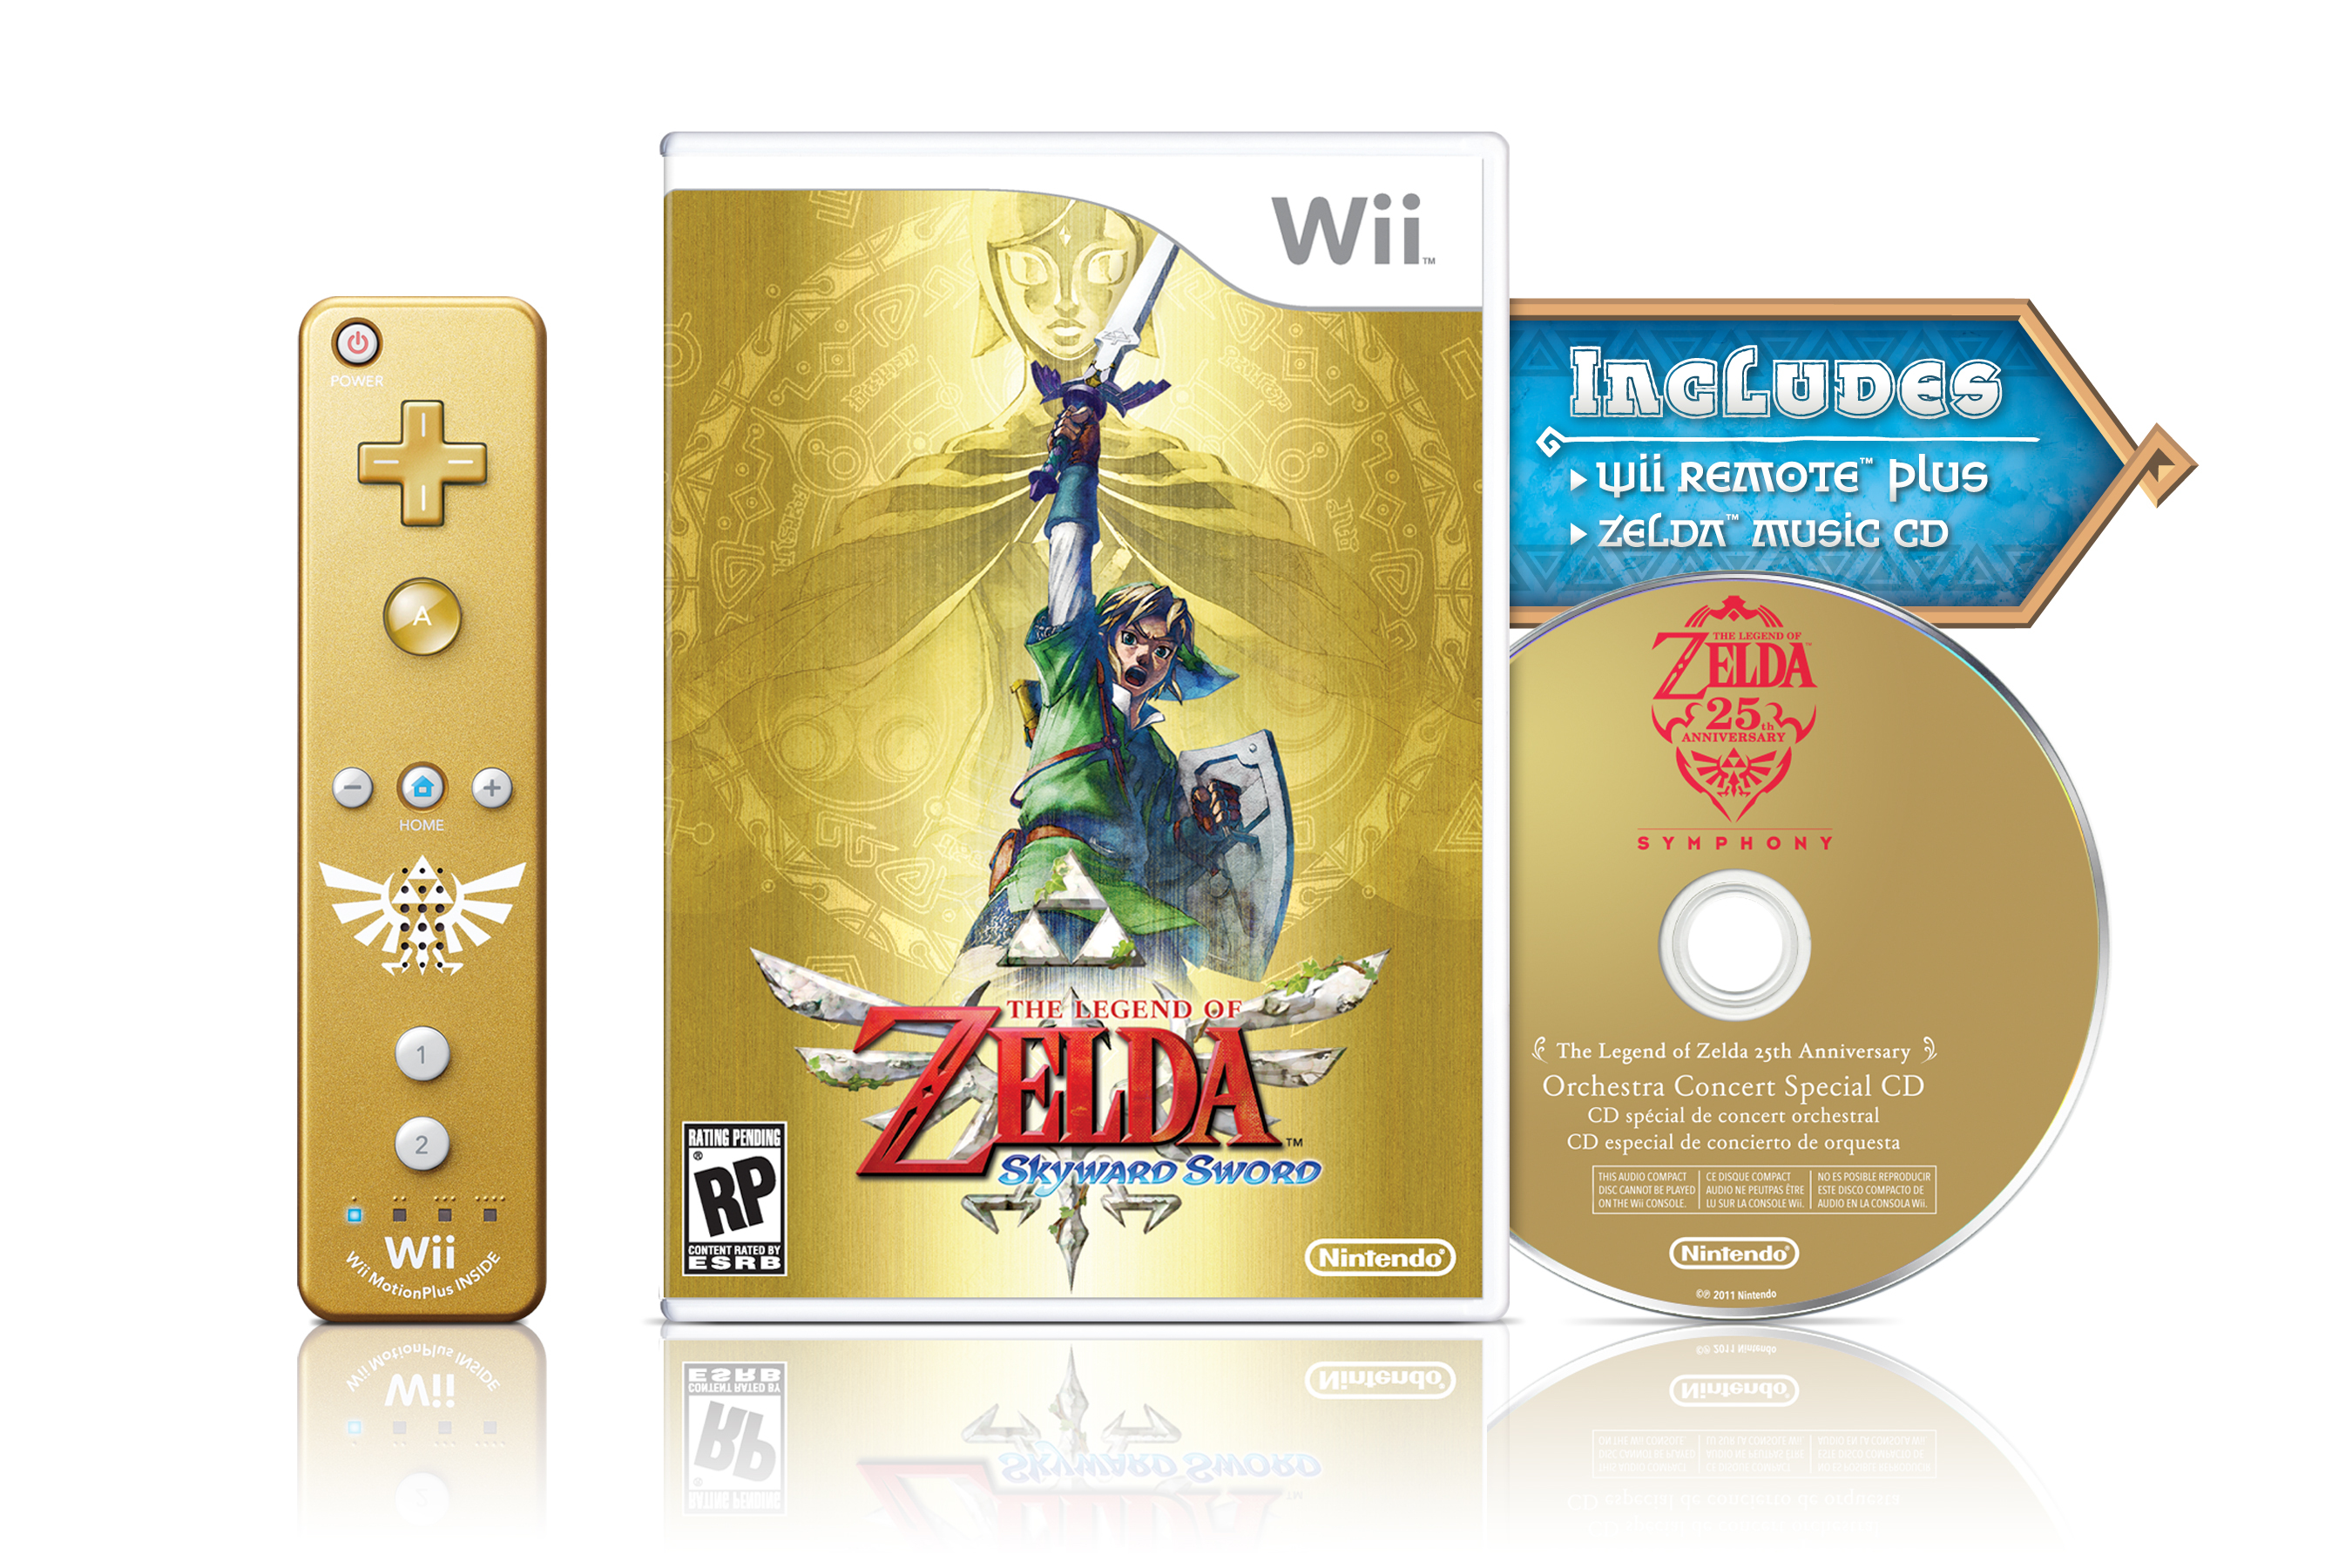 Nintendo Wii: The Legend Of Zelda Skyward Sword Gold Wii Remote Bundle  Detailed Plus Free CD! - My Nintendo News